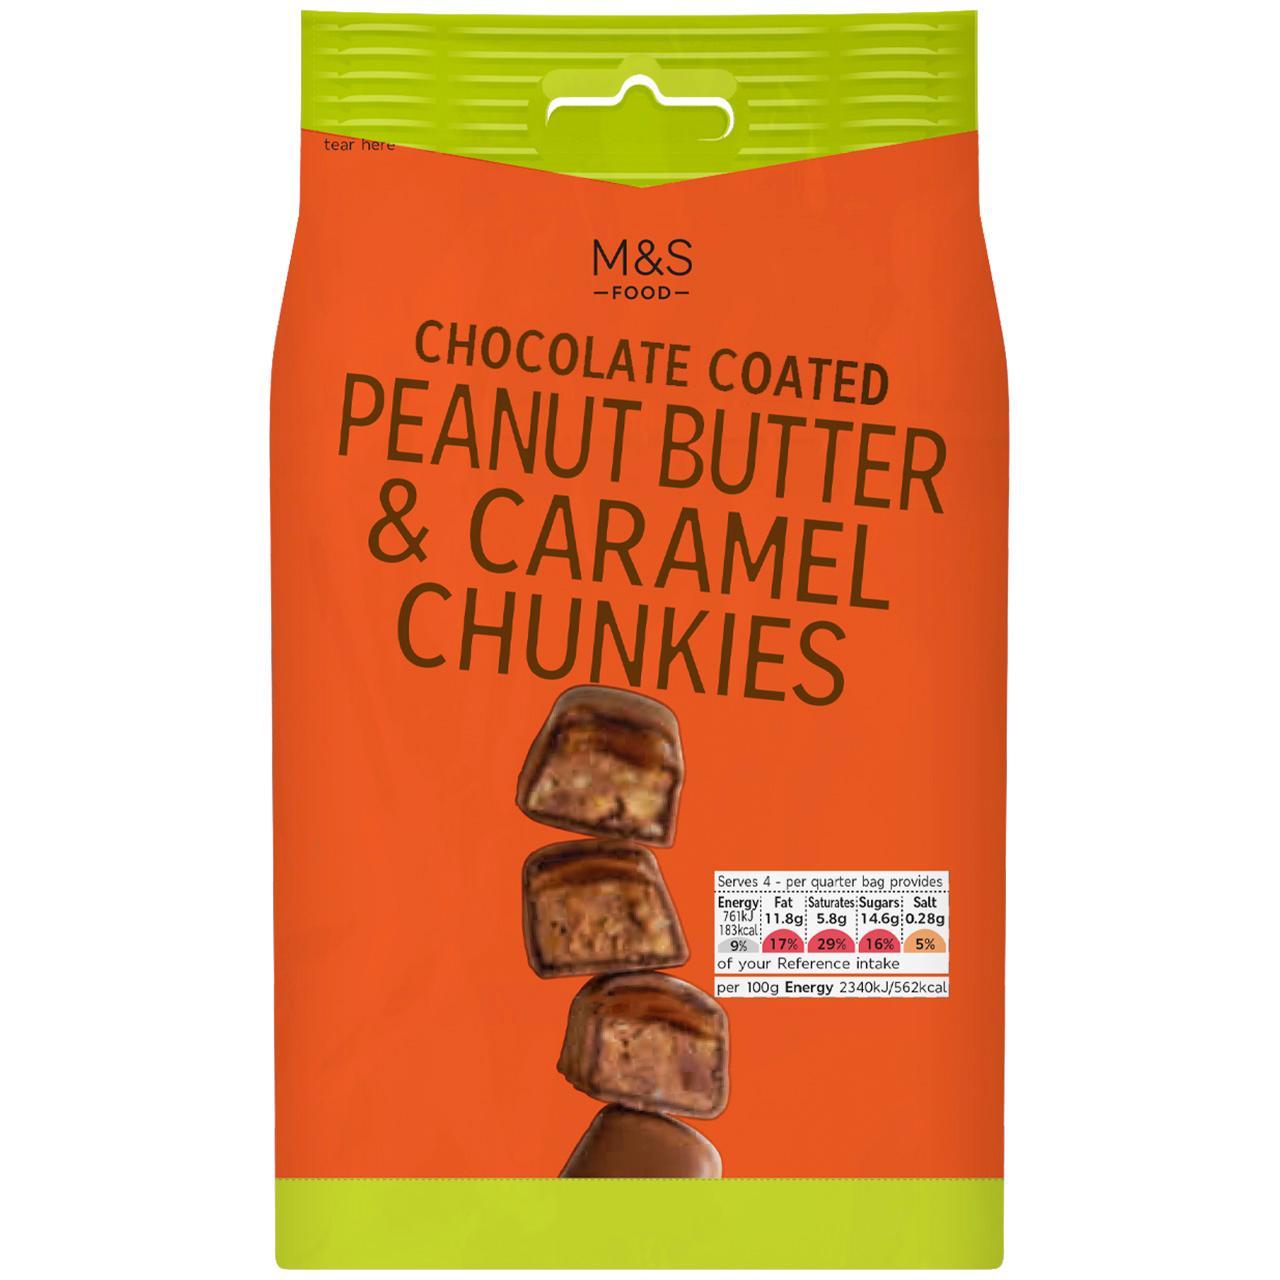 M&S Chocolate Coated Peanut Butter & Caramel Chunkies